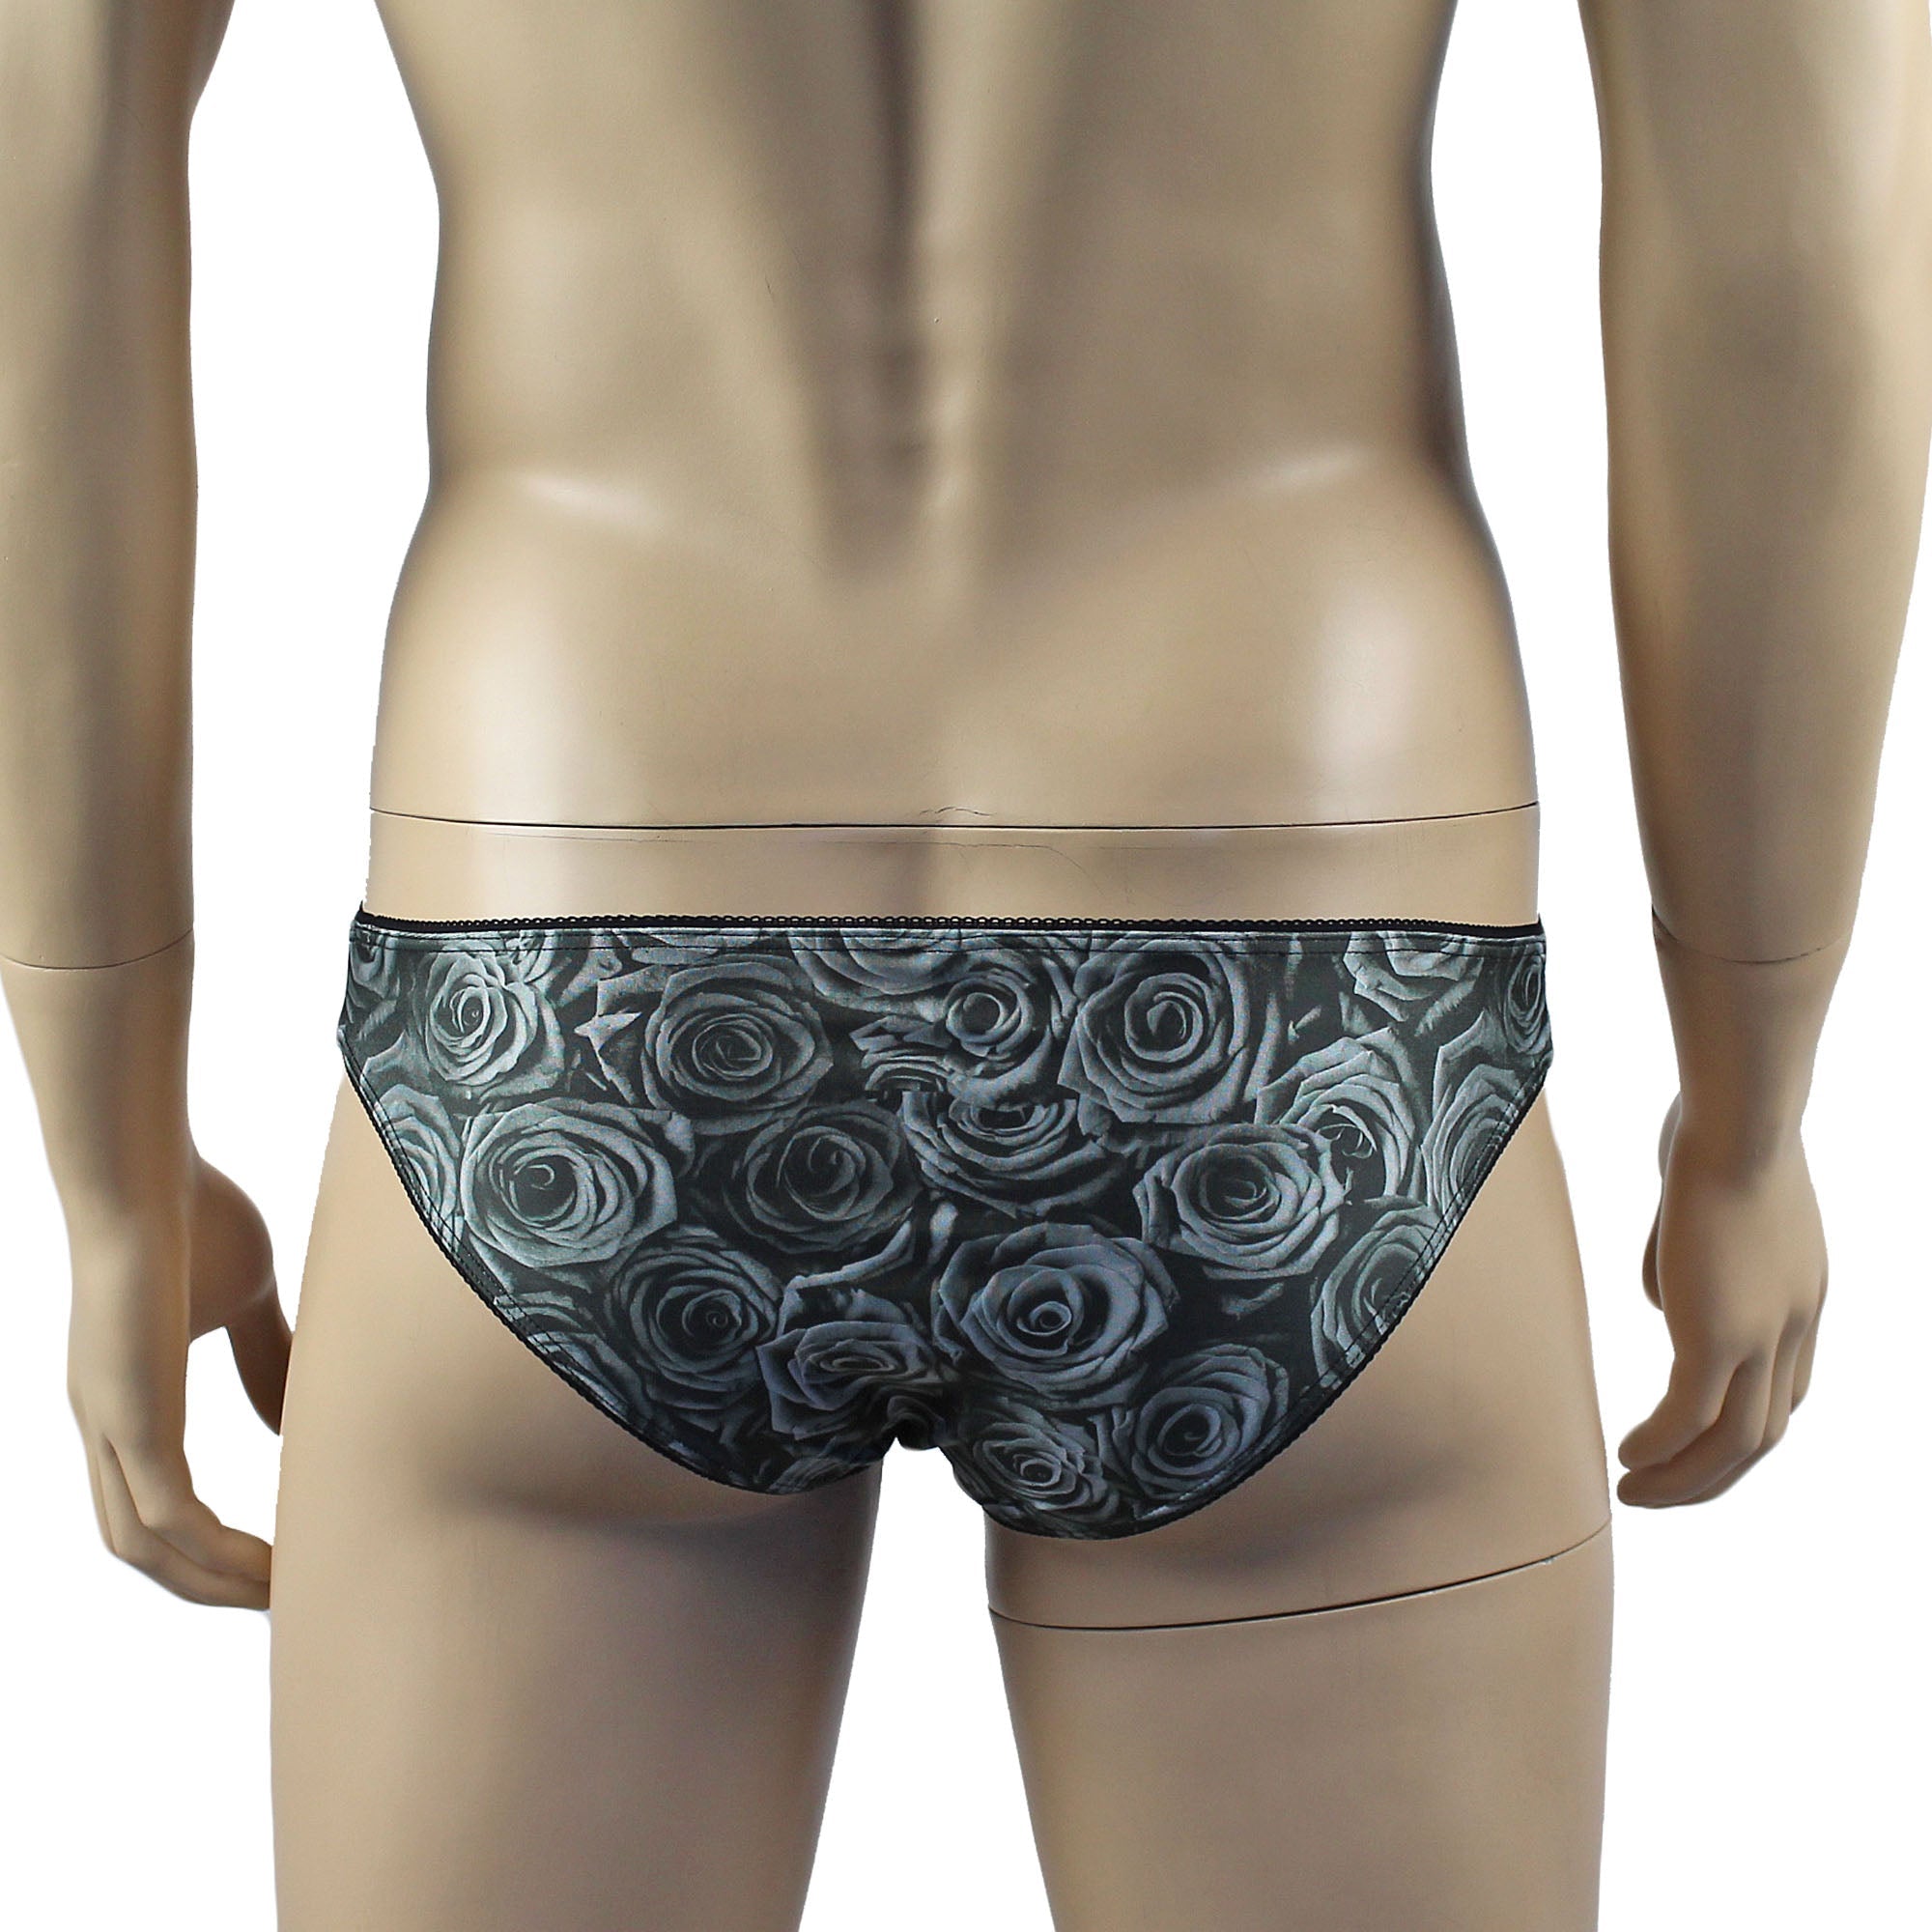 Mens Roses Stretch Spandex Panty Brief with Decorative Pico Elastic Grey